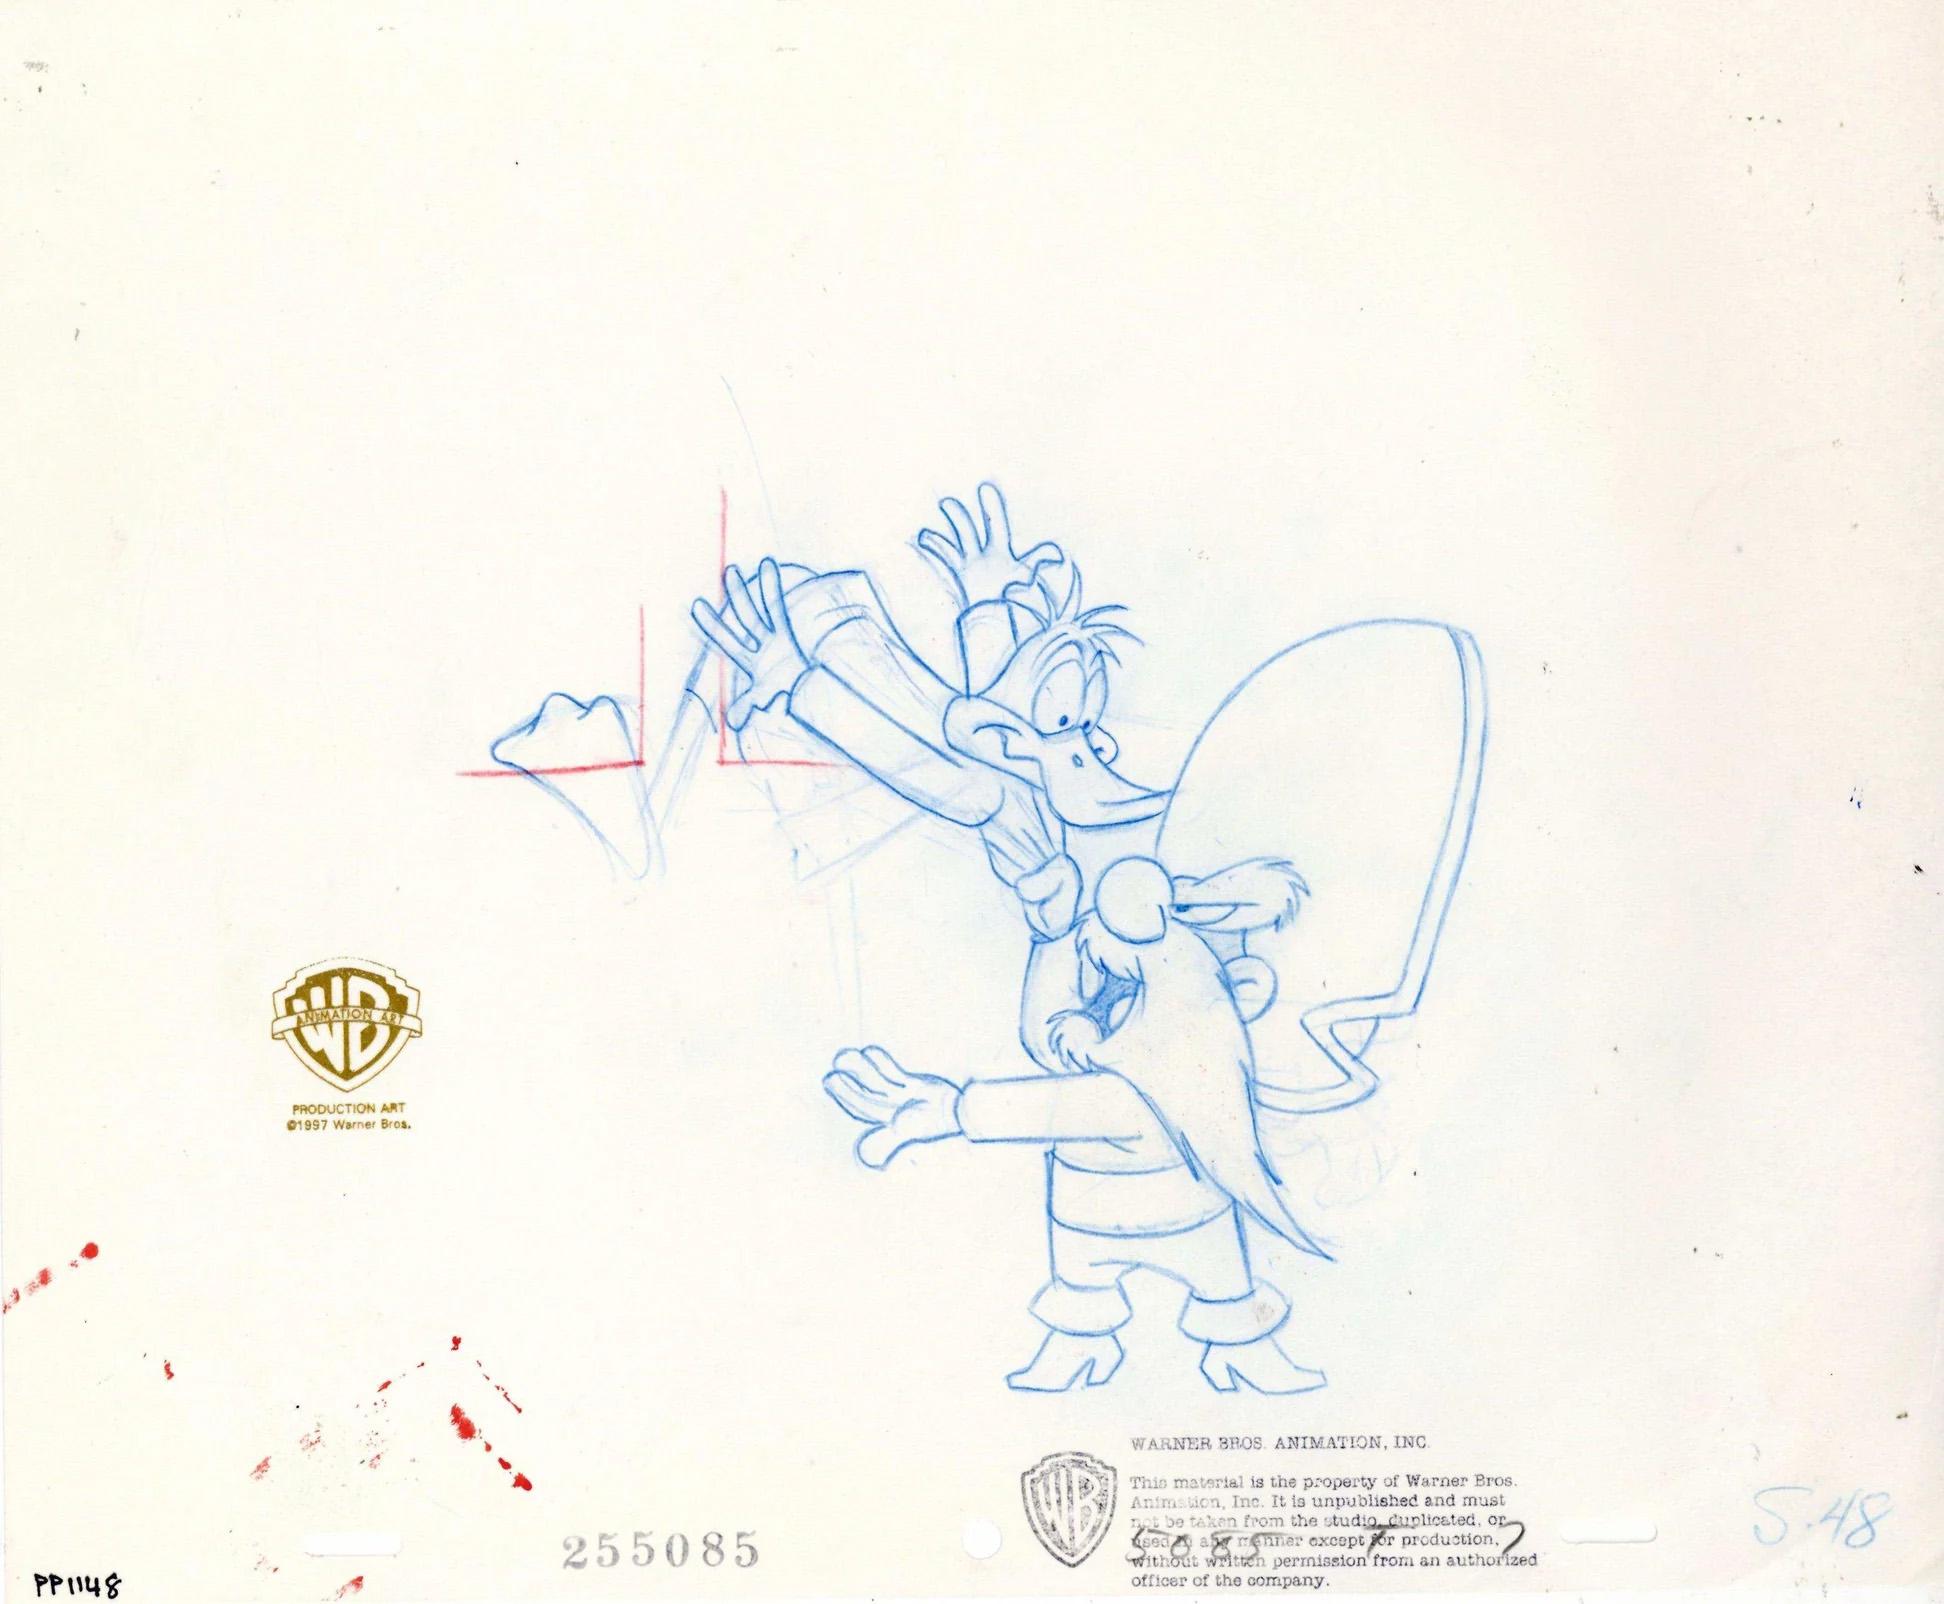 Looney Tunes Original Production Drawing: Daffy Duck and Yosemite Sam - Art by Warner Bros. Studio Artists